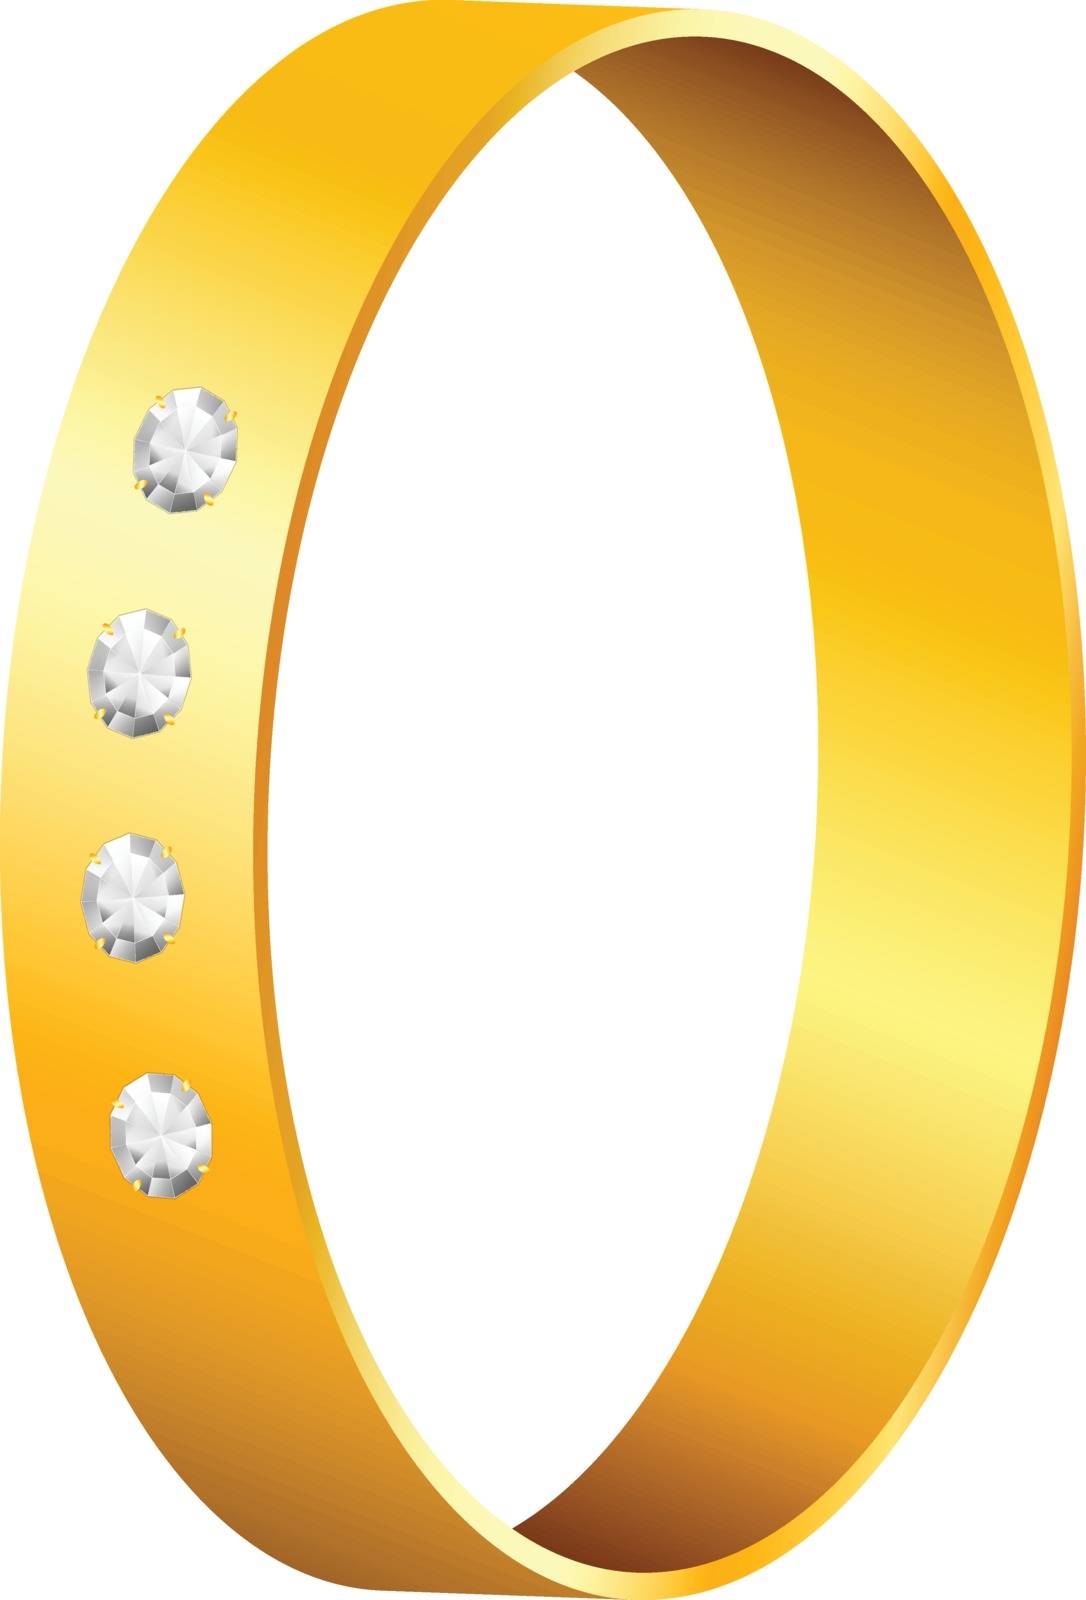 Gold ring with brilliant diamonds. Elegant golden decoration element on white isolated background.